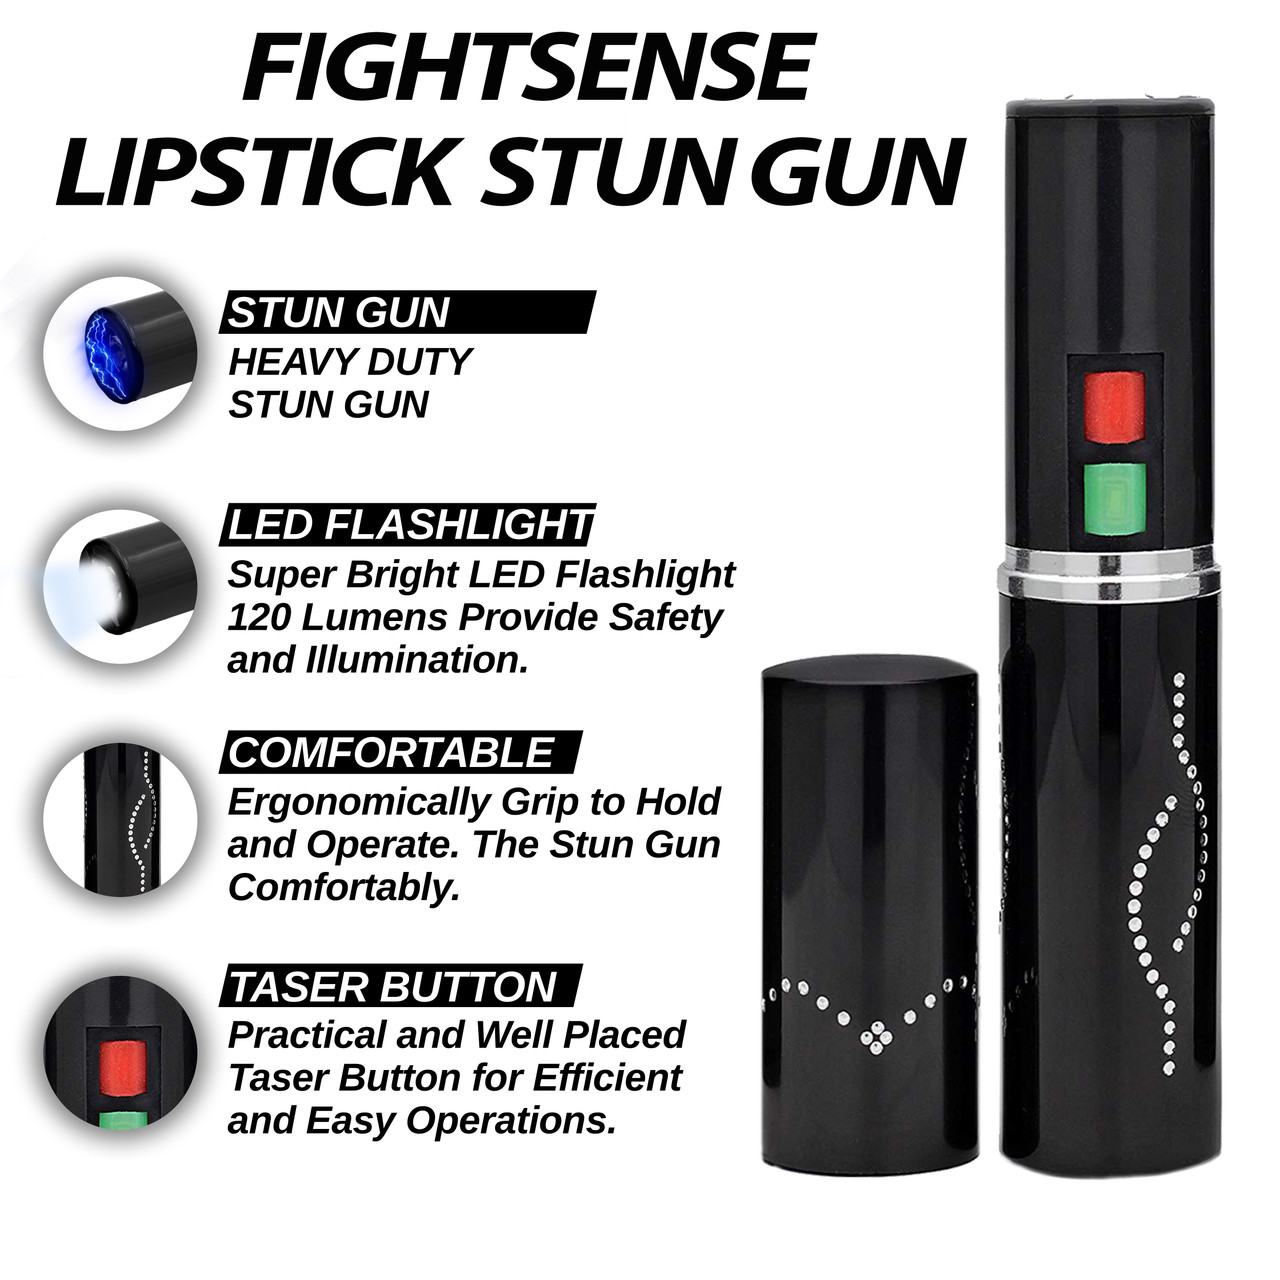 iPhone Stun Guns, Lipstick Knives: The TikTok Self-Defense Trend